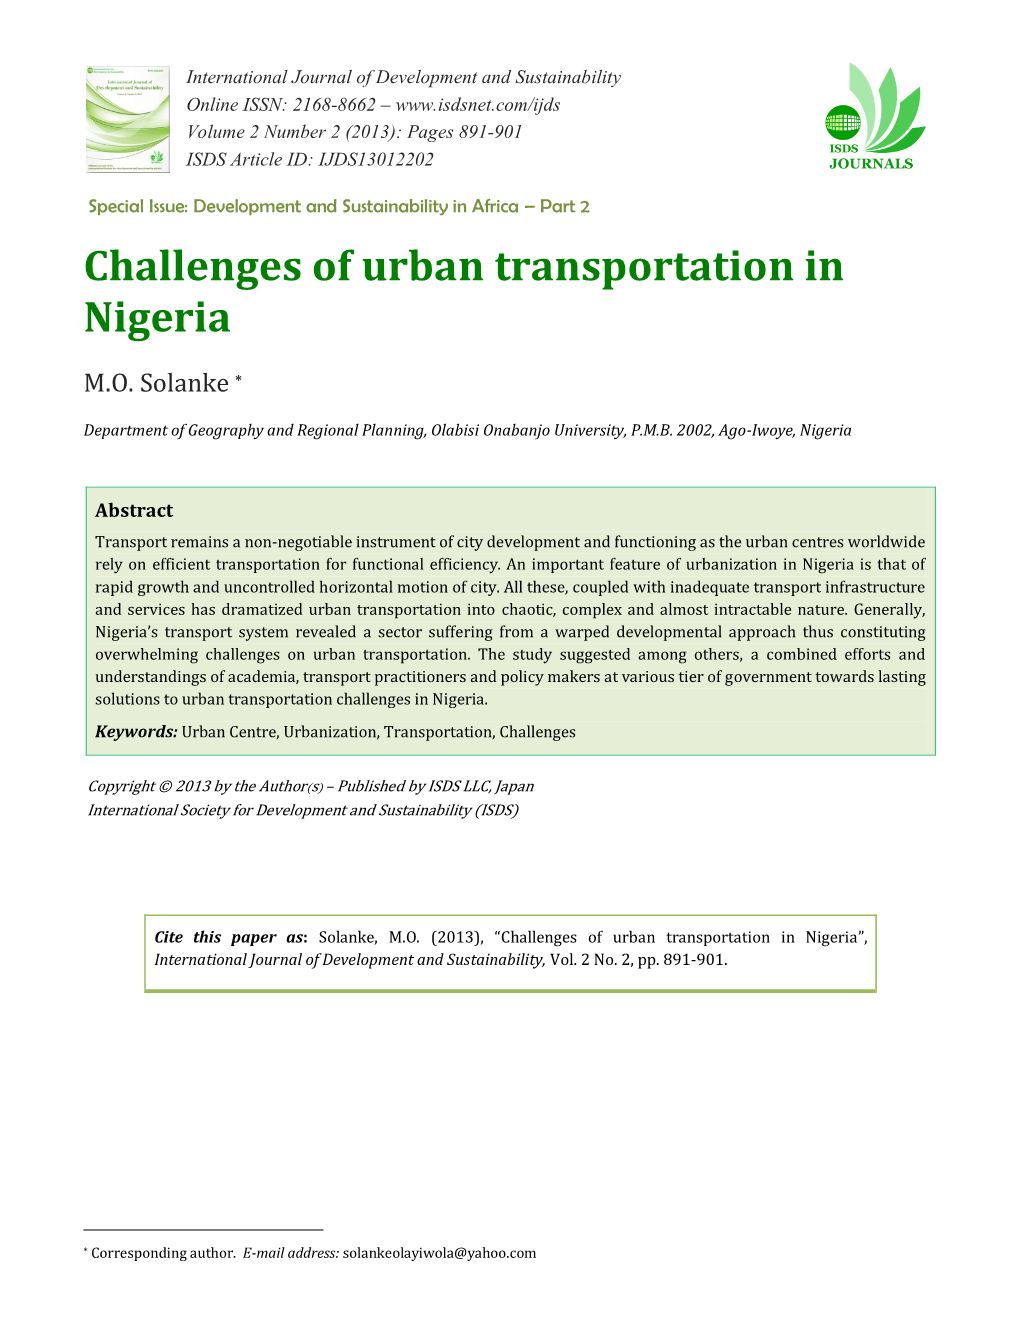 Challenges of Urban Transportation in Nigeria